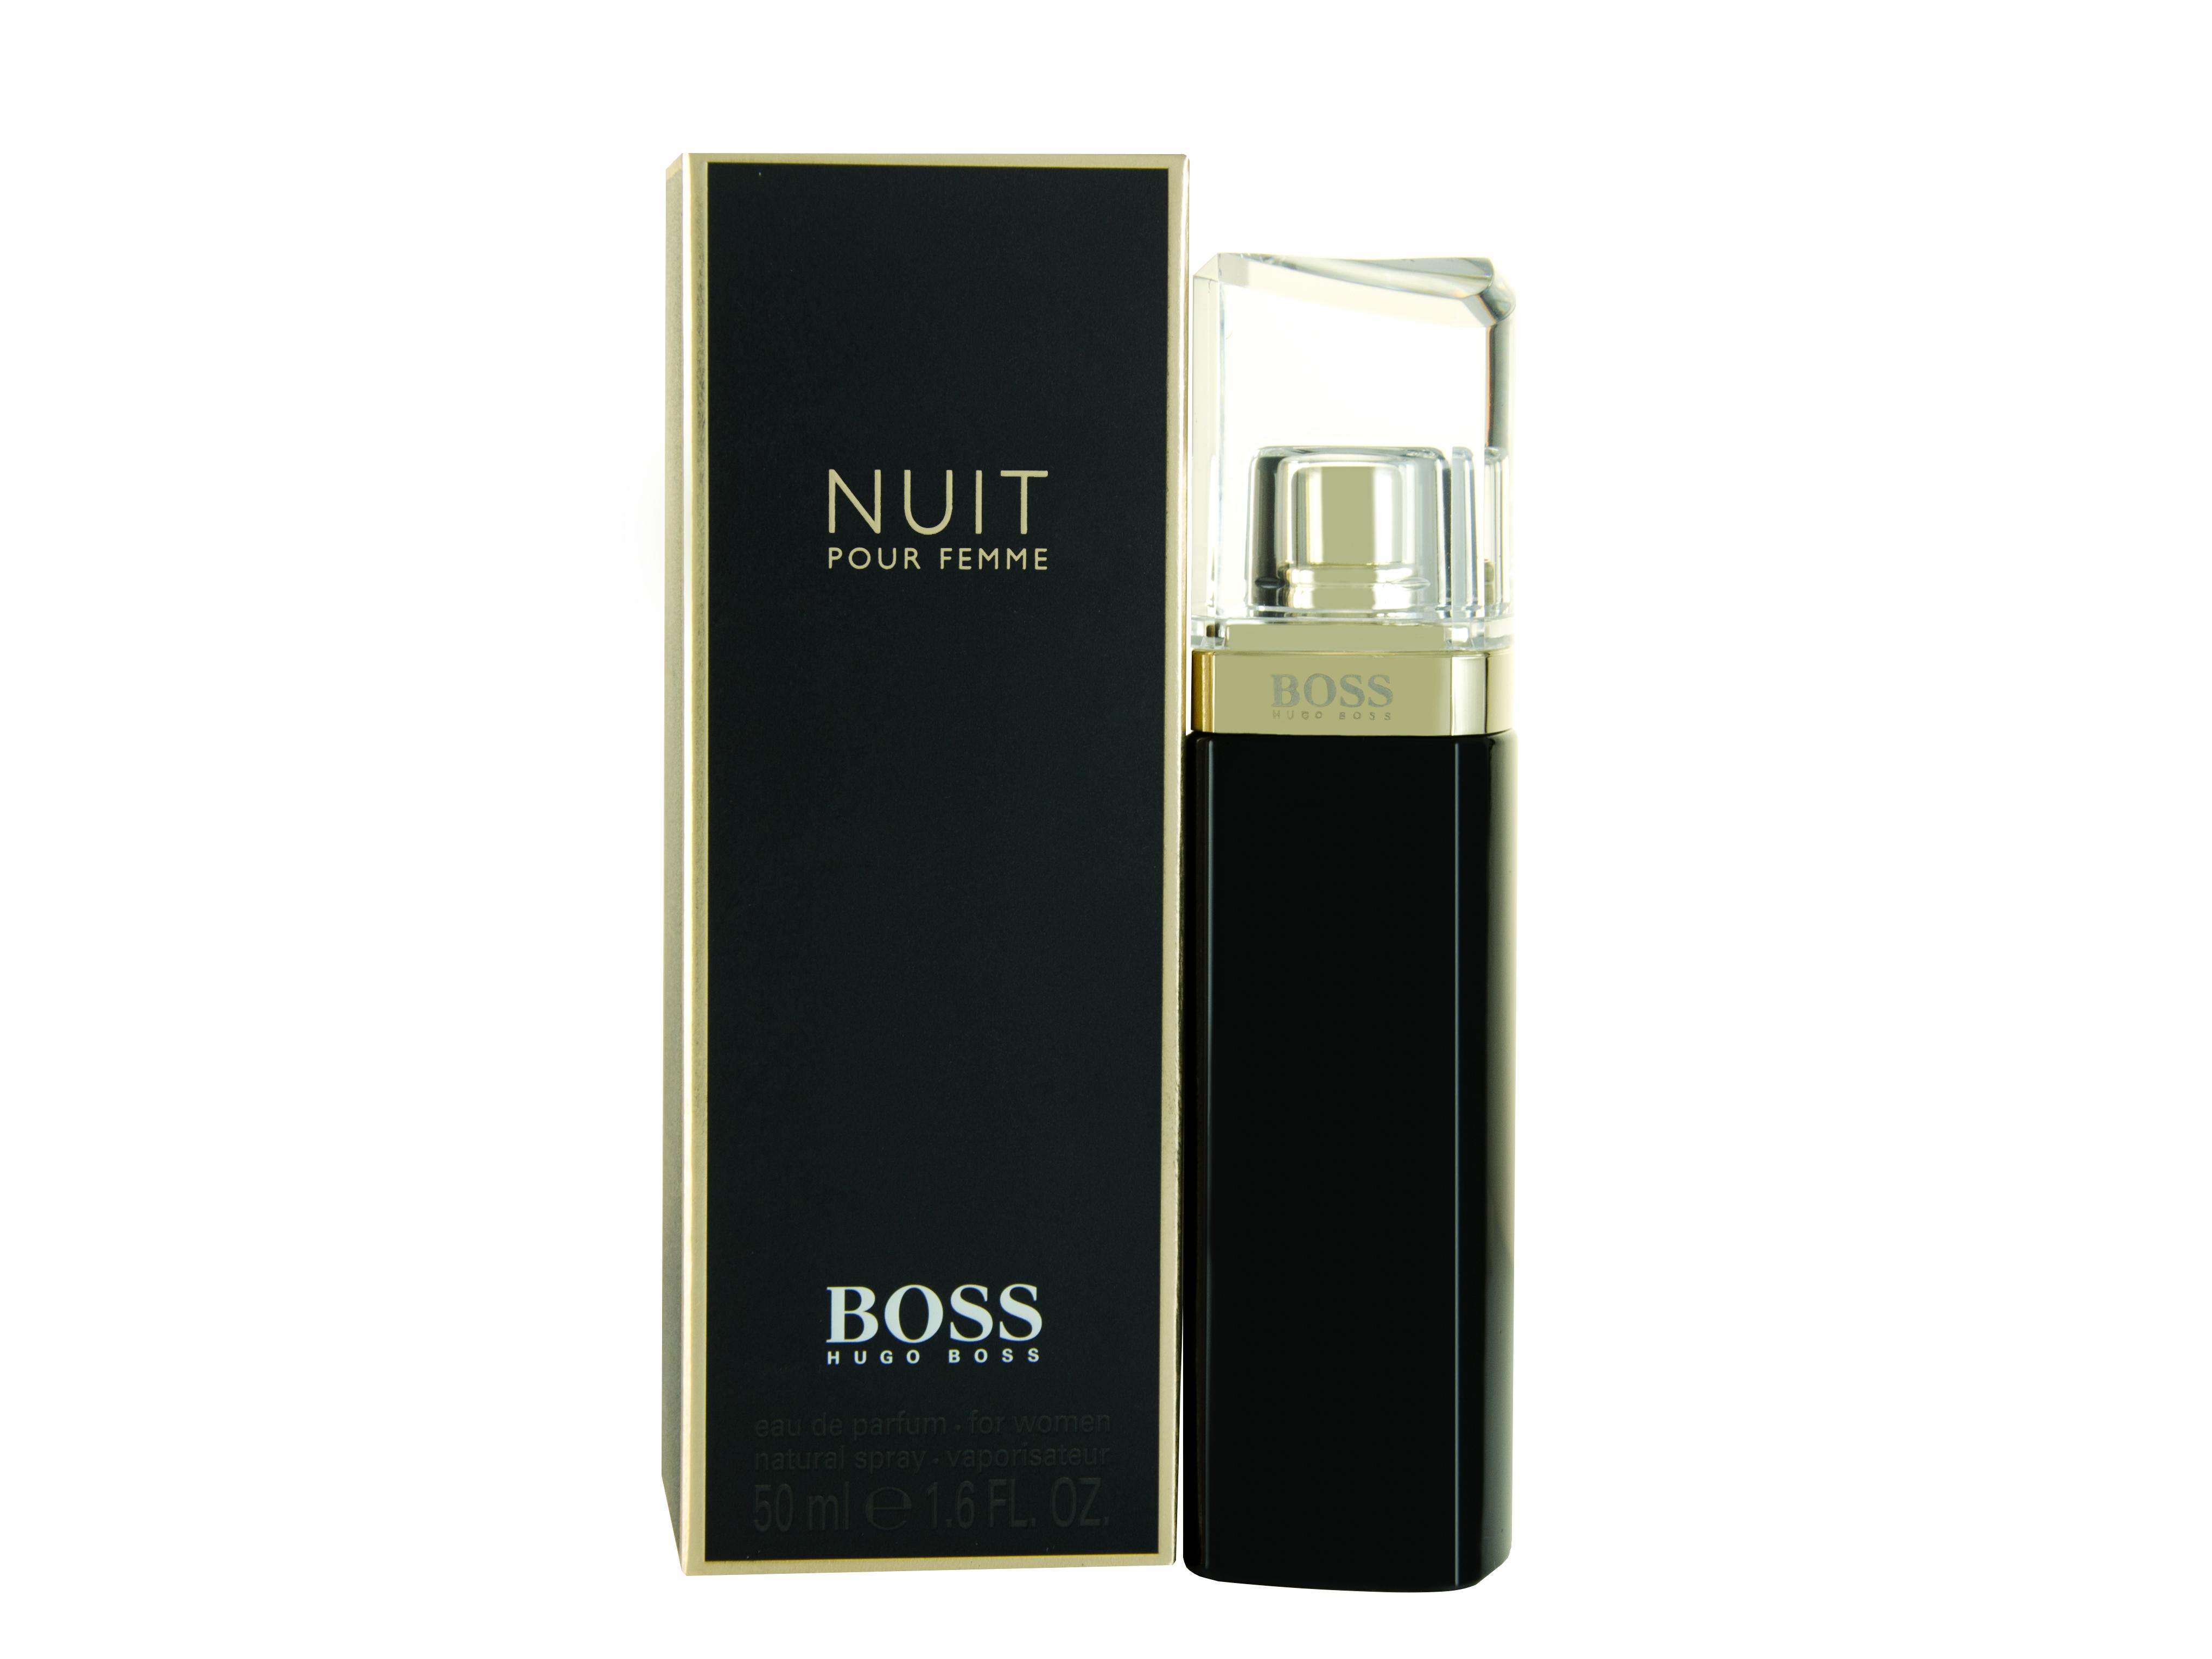 Hugo Boss Boss Nuit Pour Femme Eau de Parfum 50ml Spray